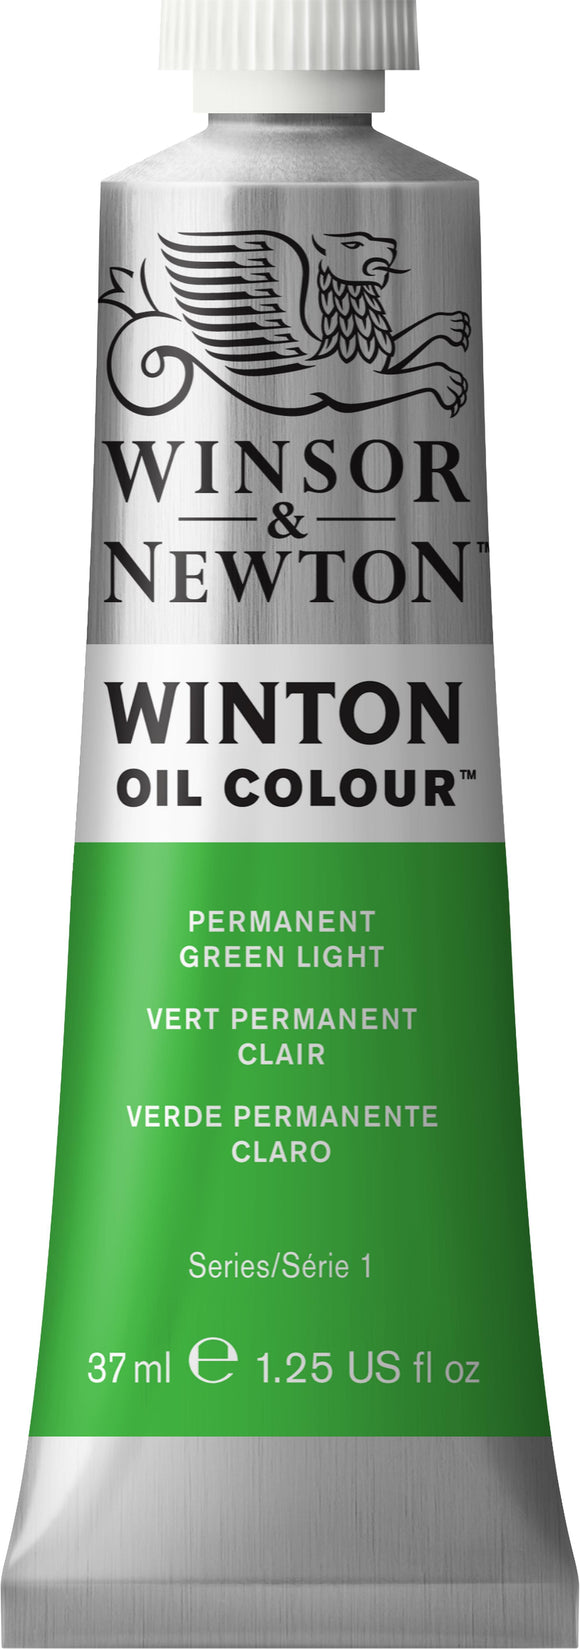 Winsor & Newton Winton Oil Colour Permanent Green Light 37Ml